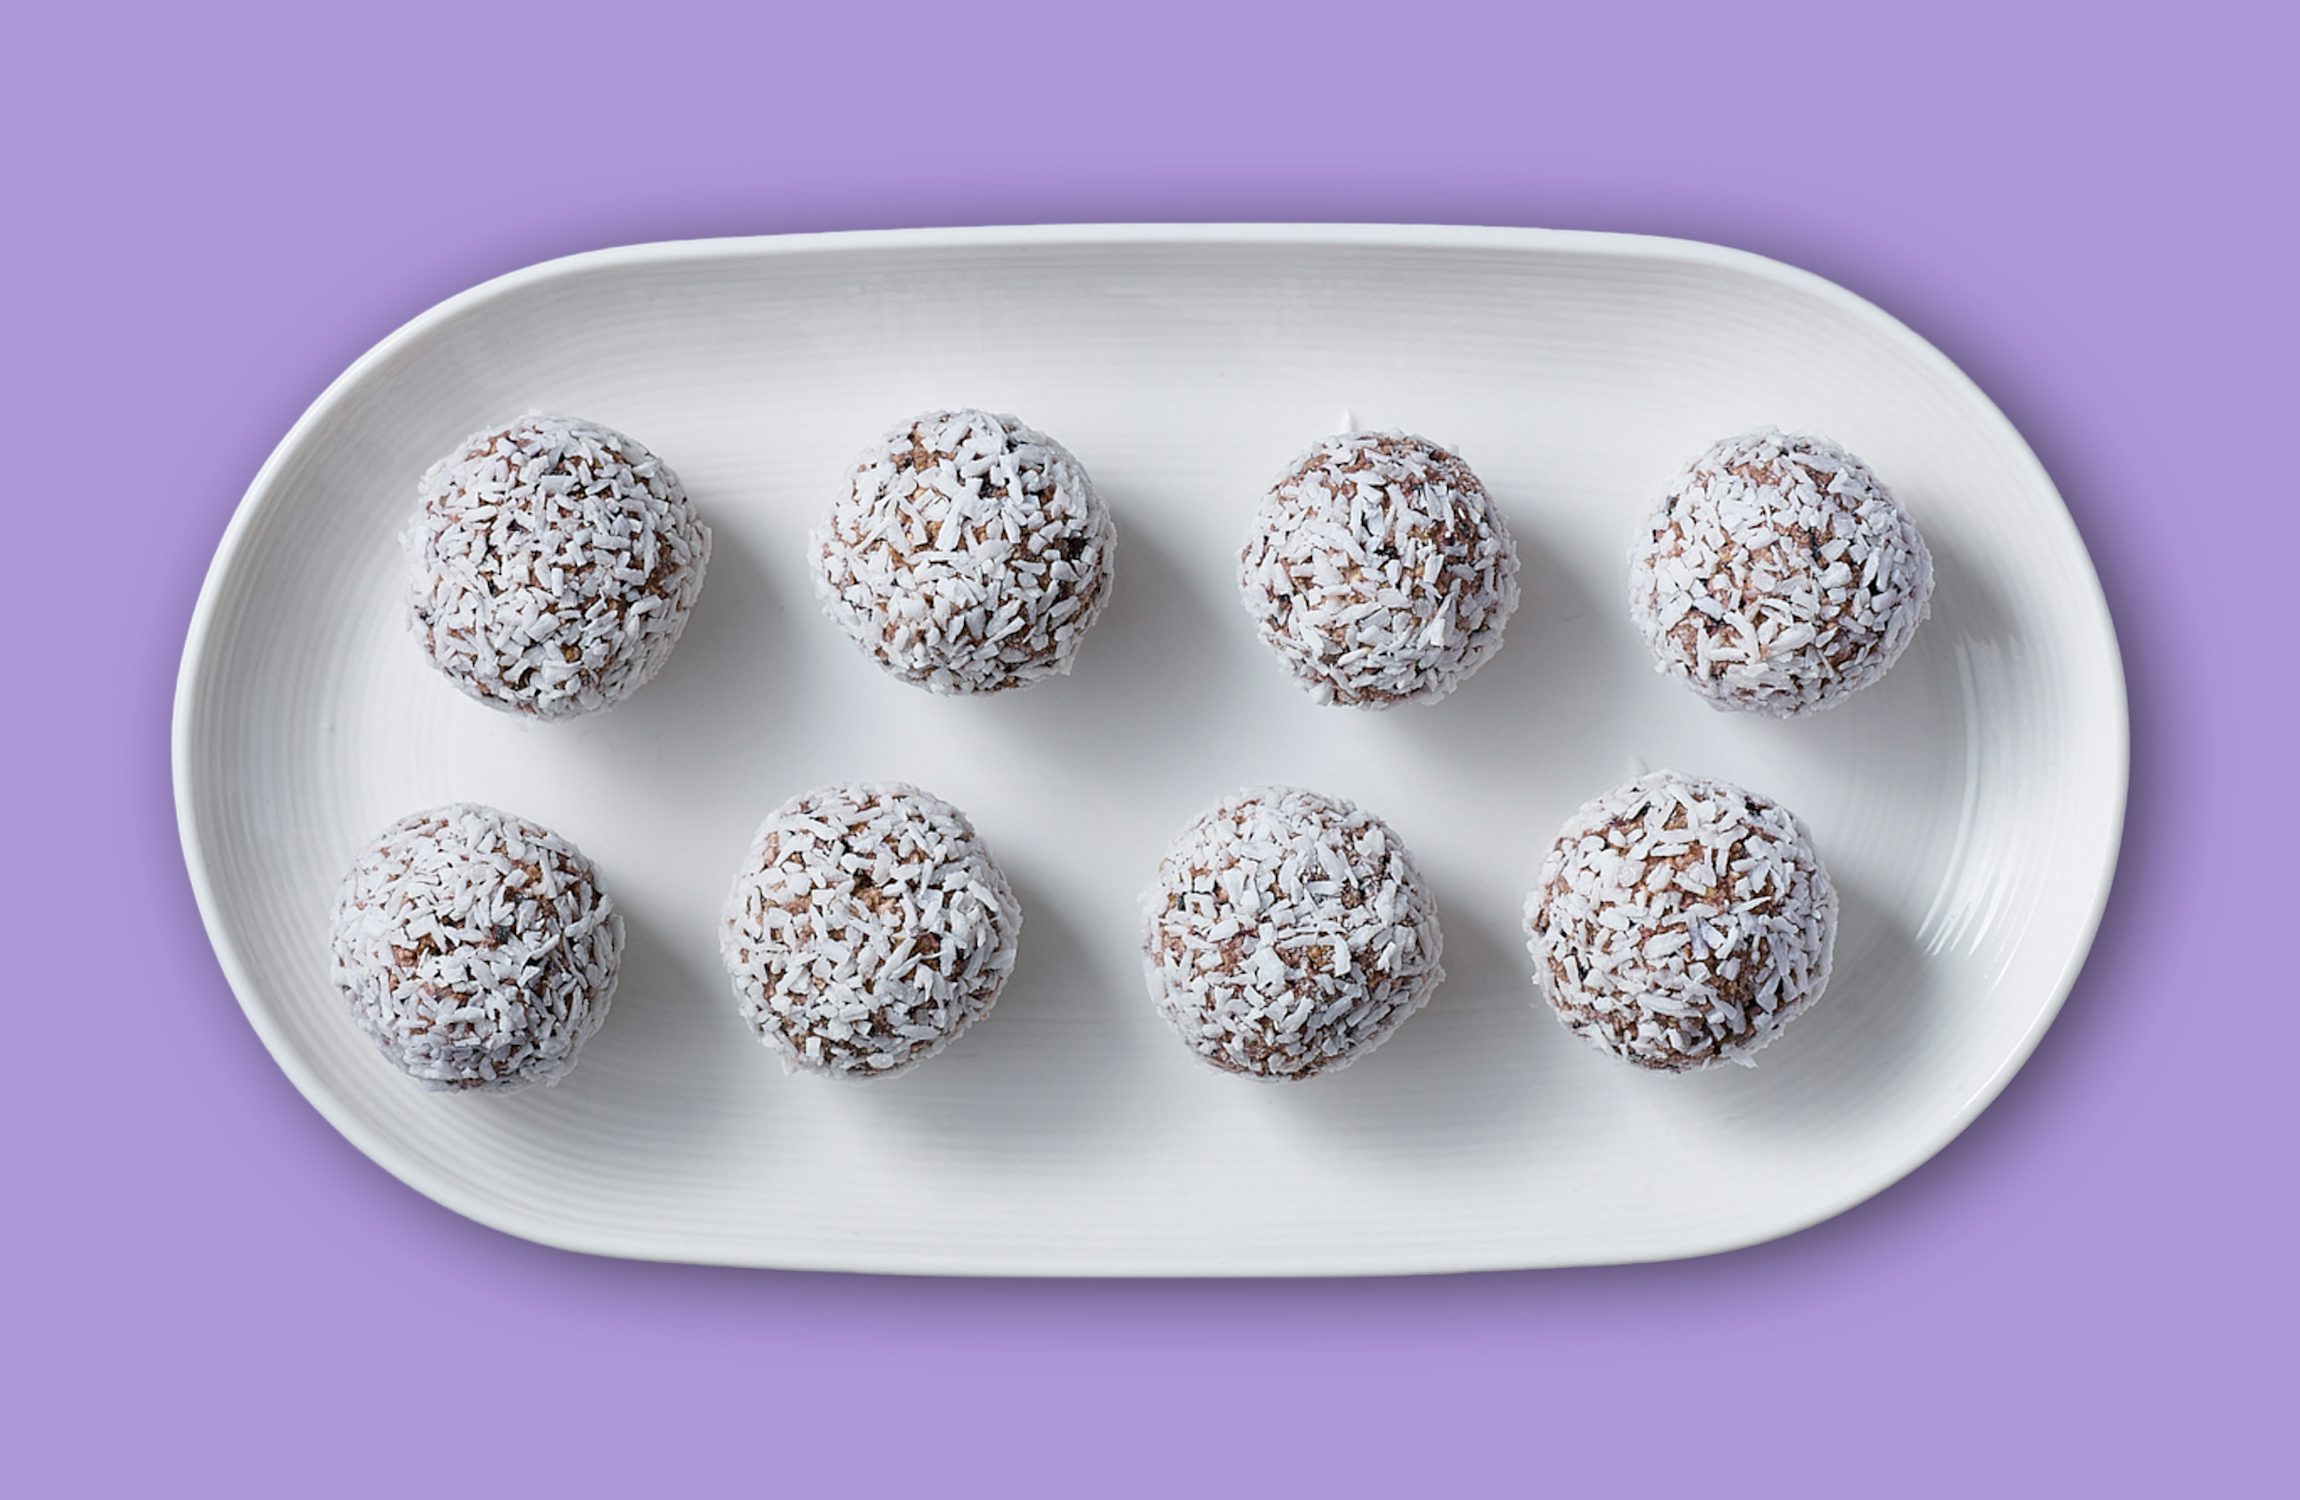 Blueberry Muffin Health Balls